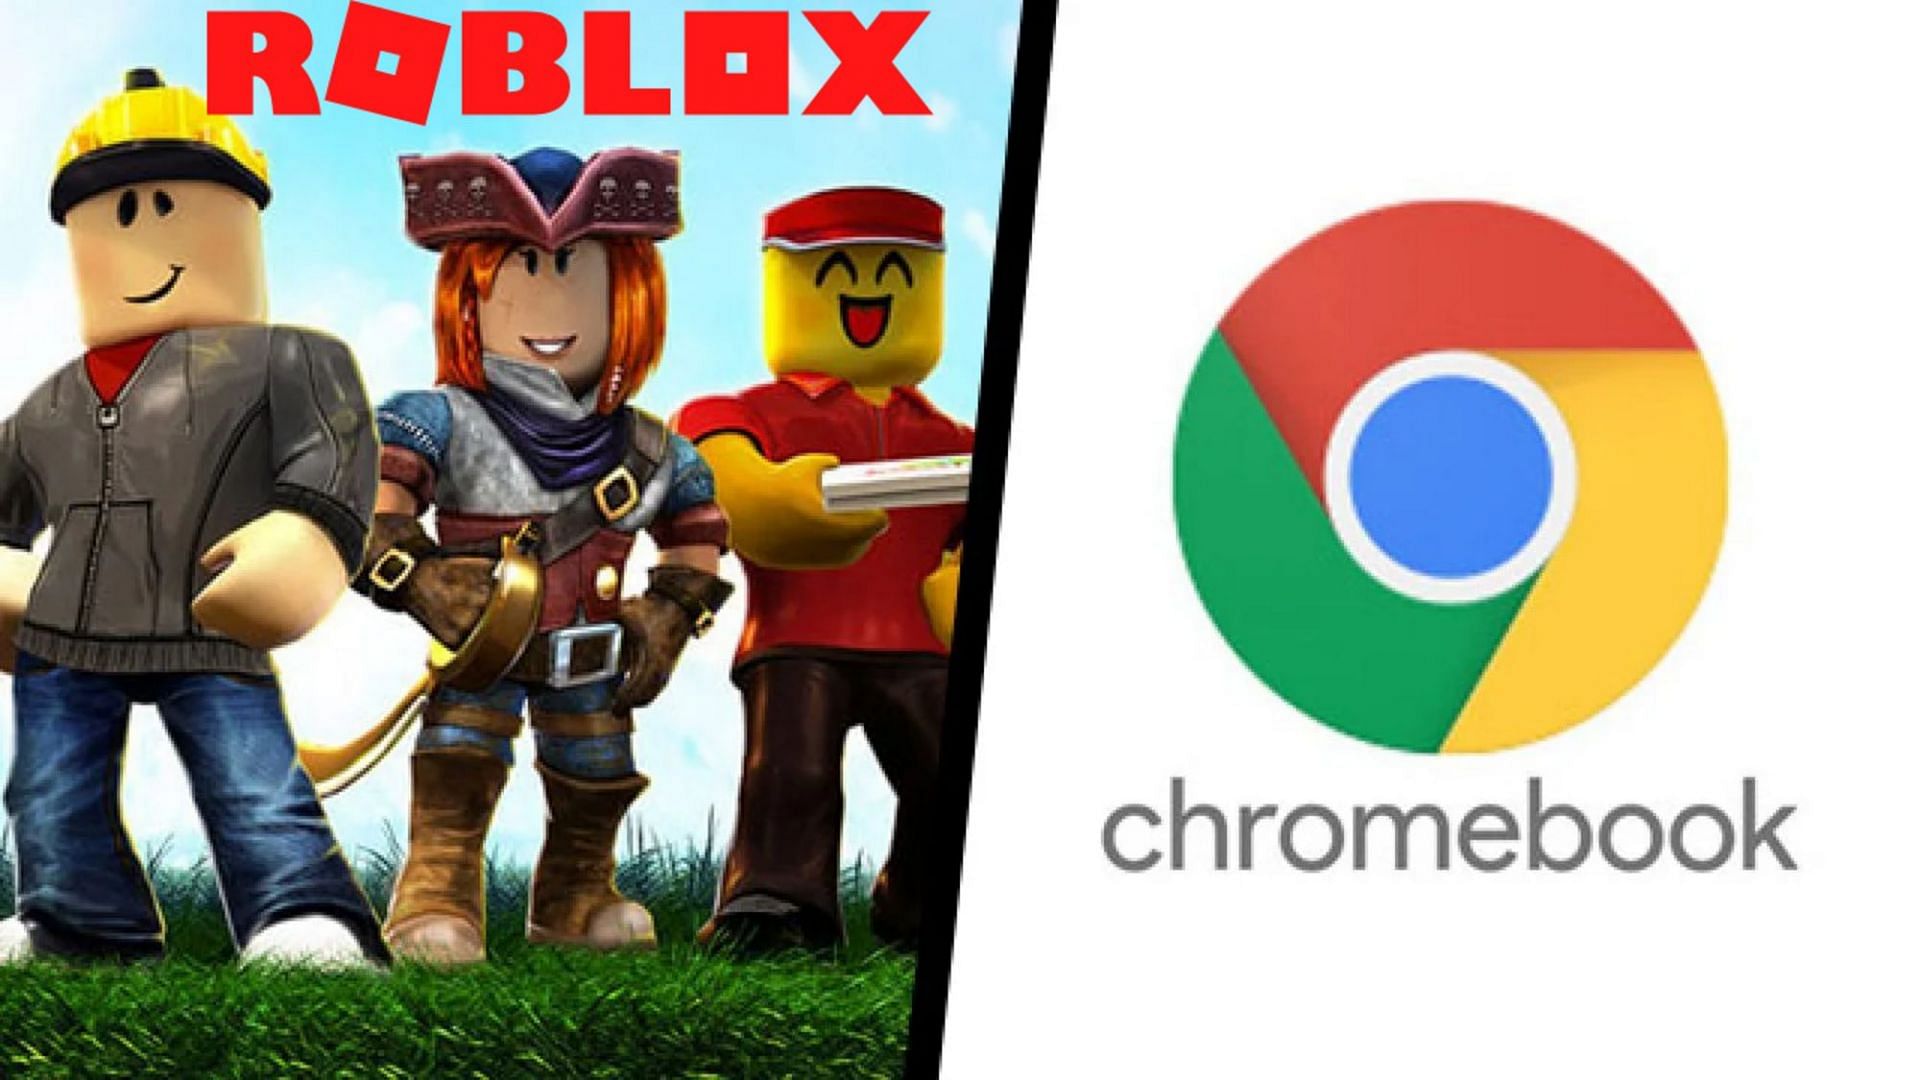 Play Roblox on Google Chromebooks (Image via Roblox)